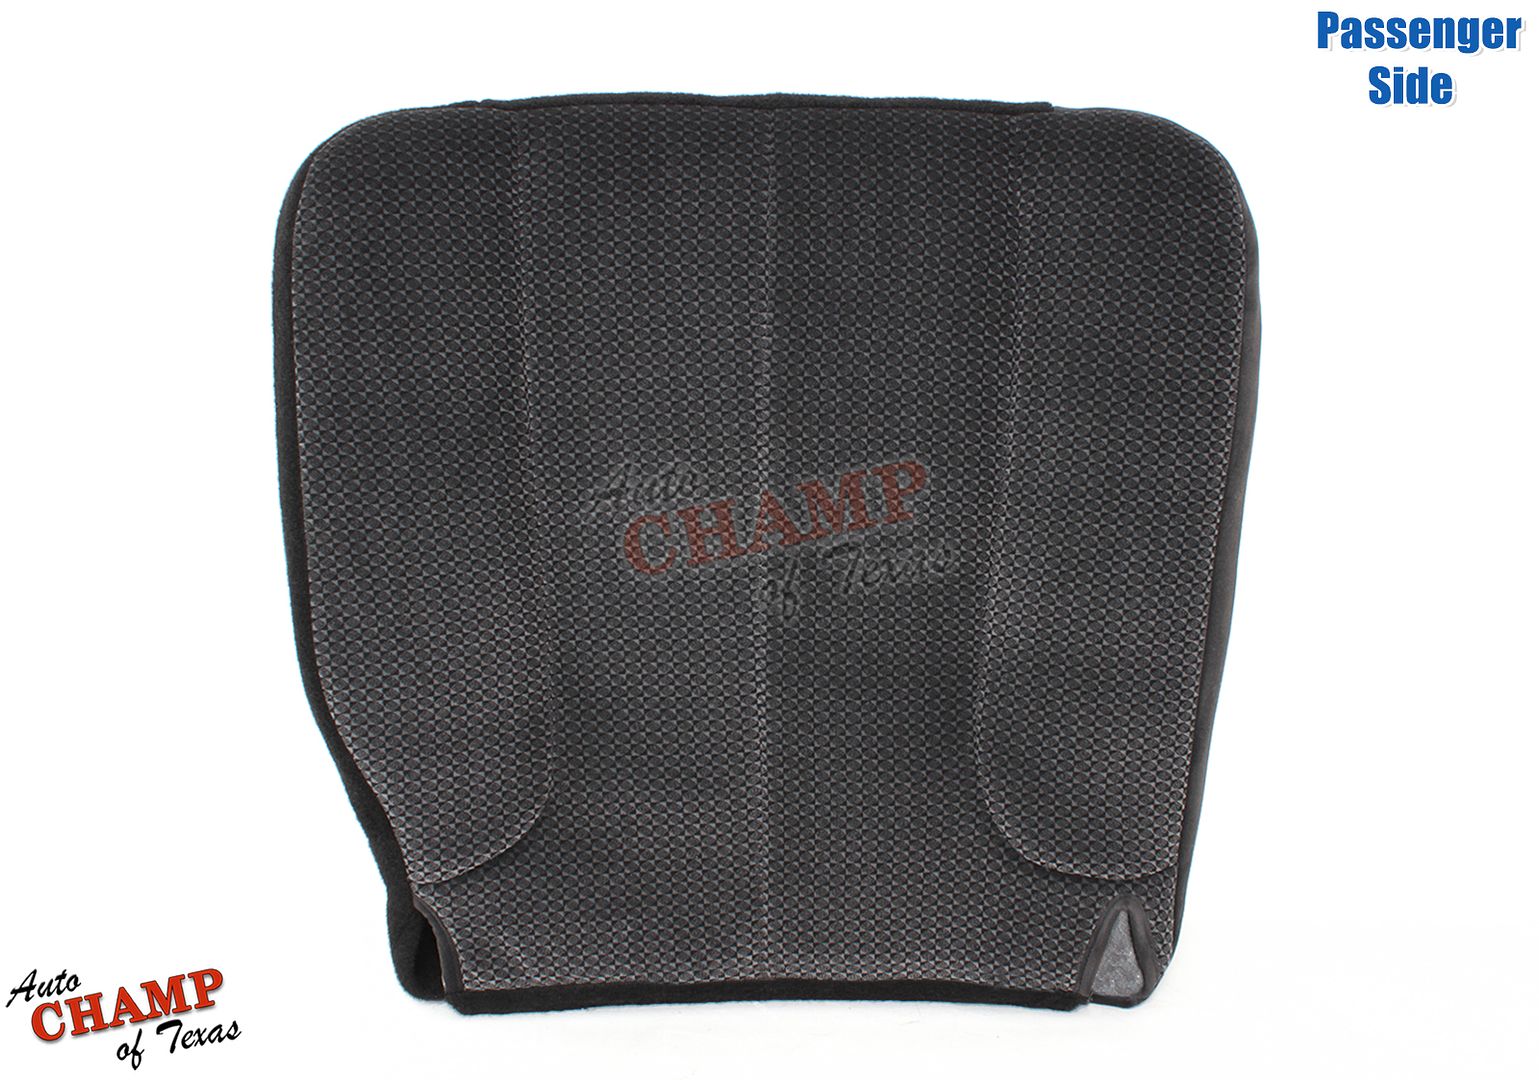 Details About 03 04 05 Dodge Ram 1500 2500 3500 Slt Passenger Bottom Cloth Seat Cover Gray